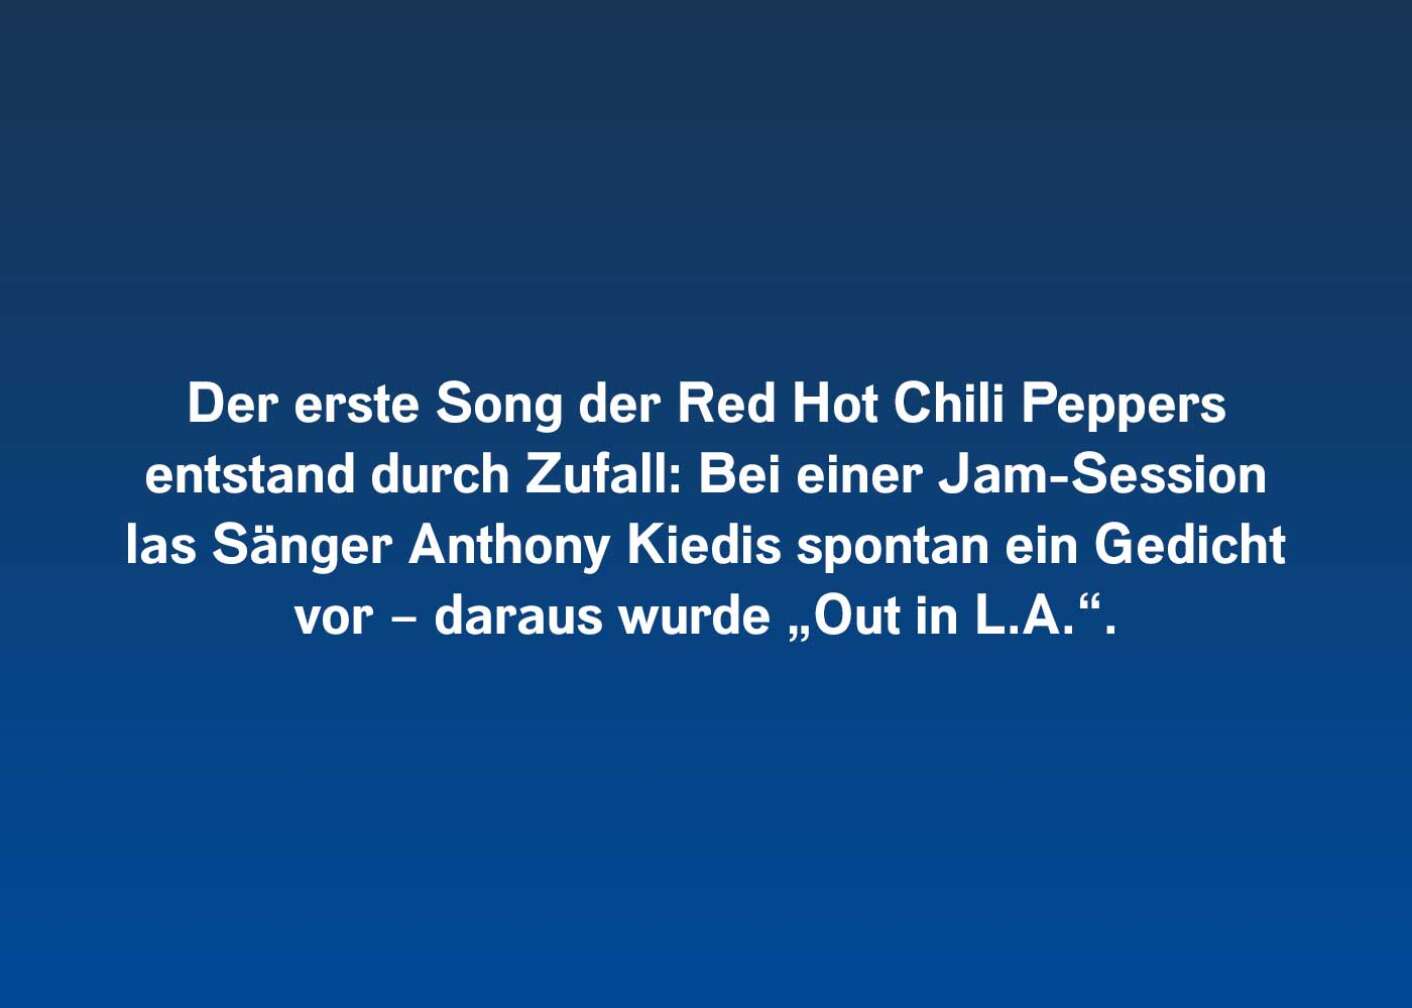 10 Fakten über die Red Hot Chili Peppers (erste Song)